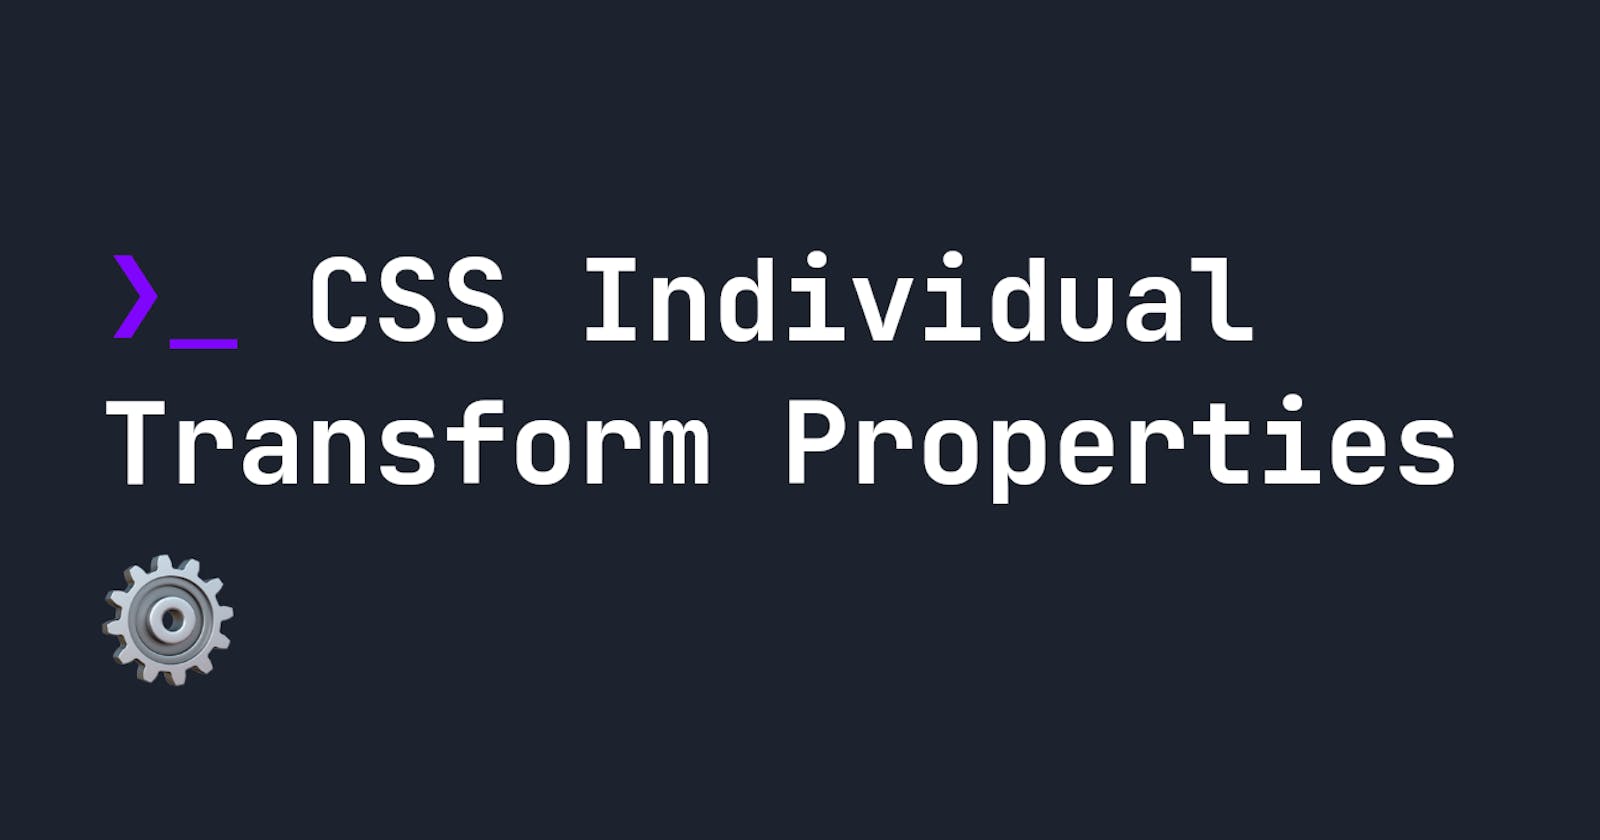 CSS Individual Transform Properties